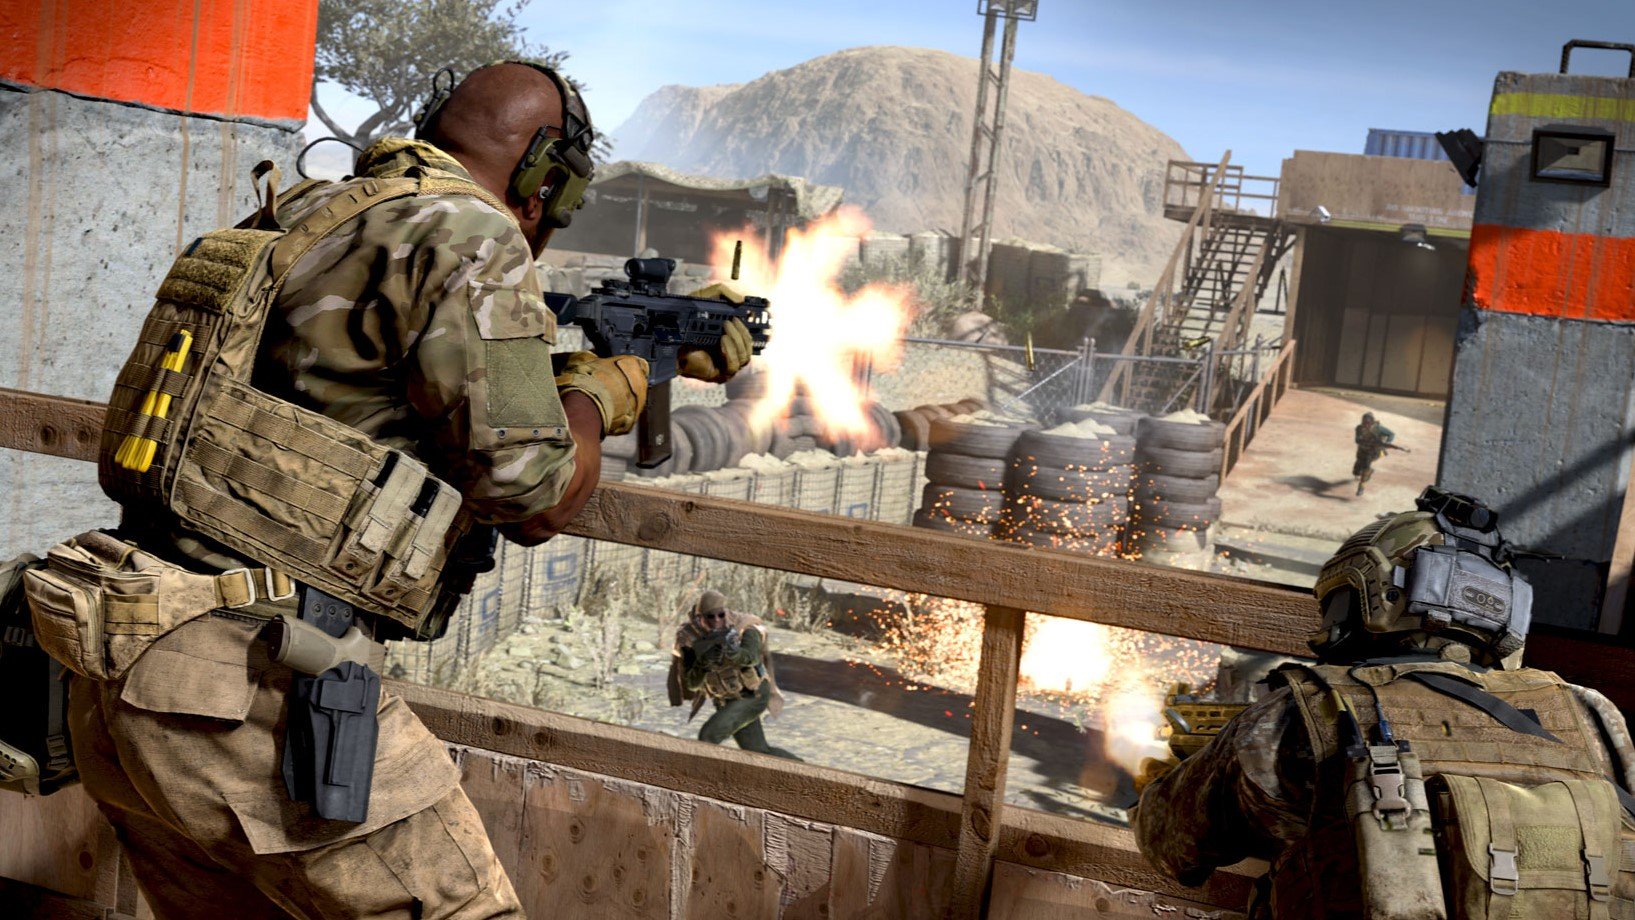 Call of Duty Leaker Drops New Modern Warfare 2 Teases